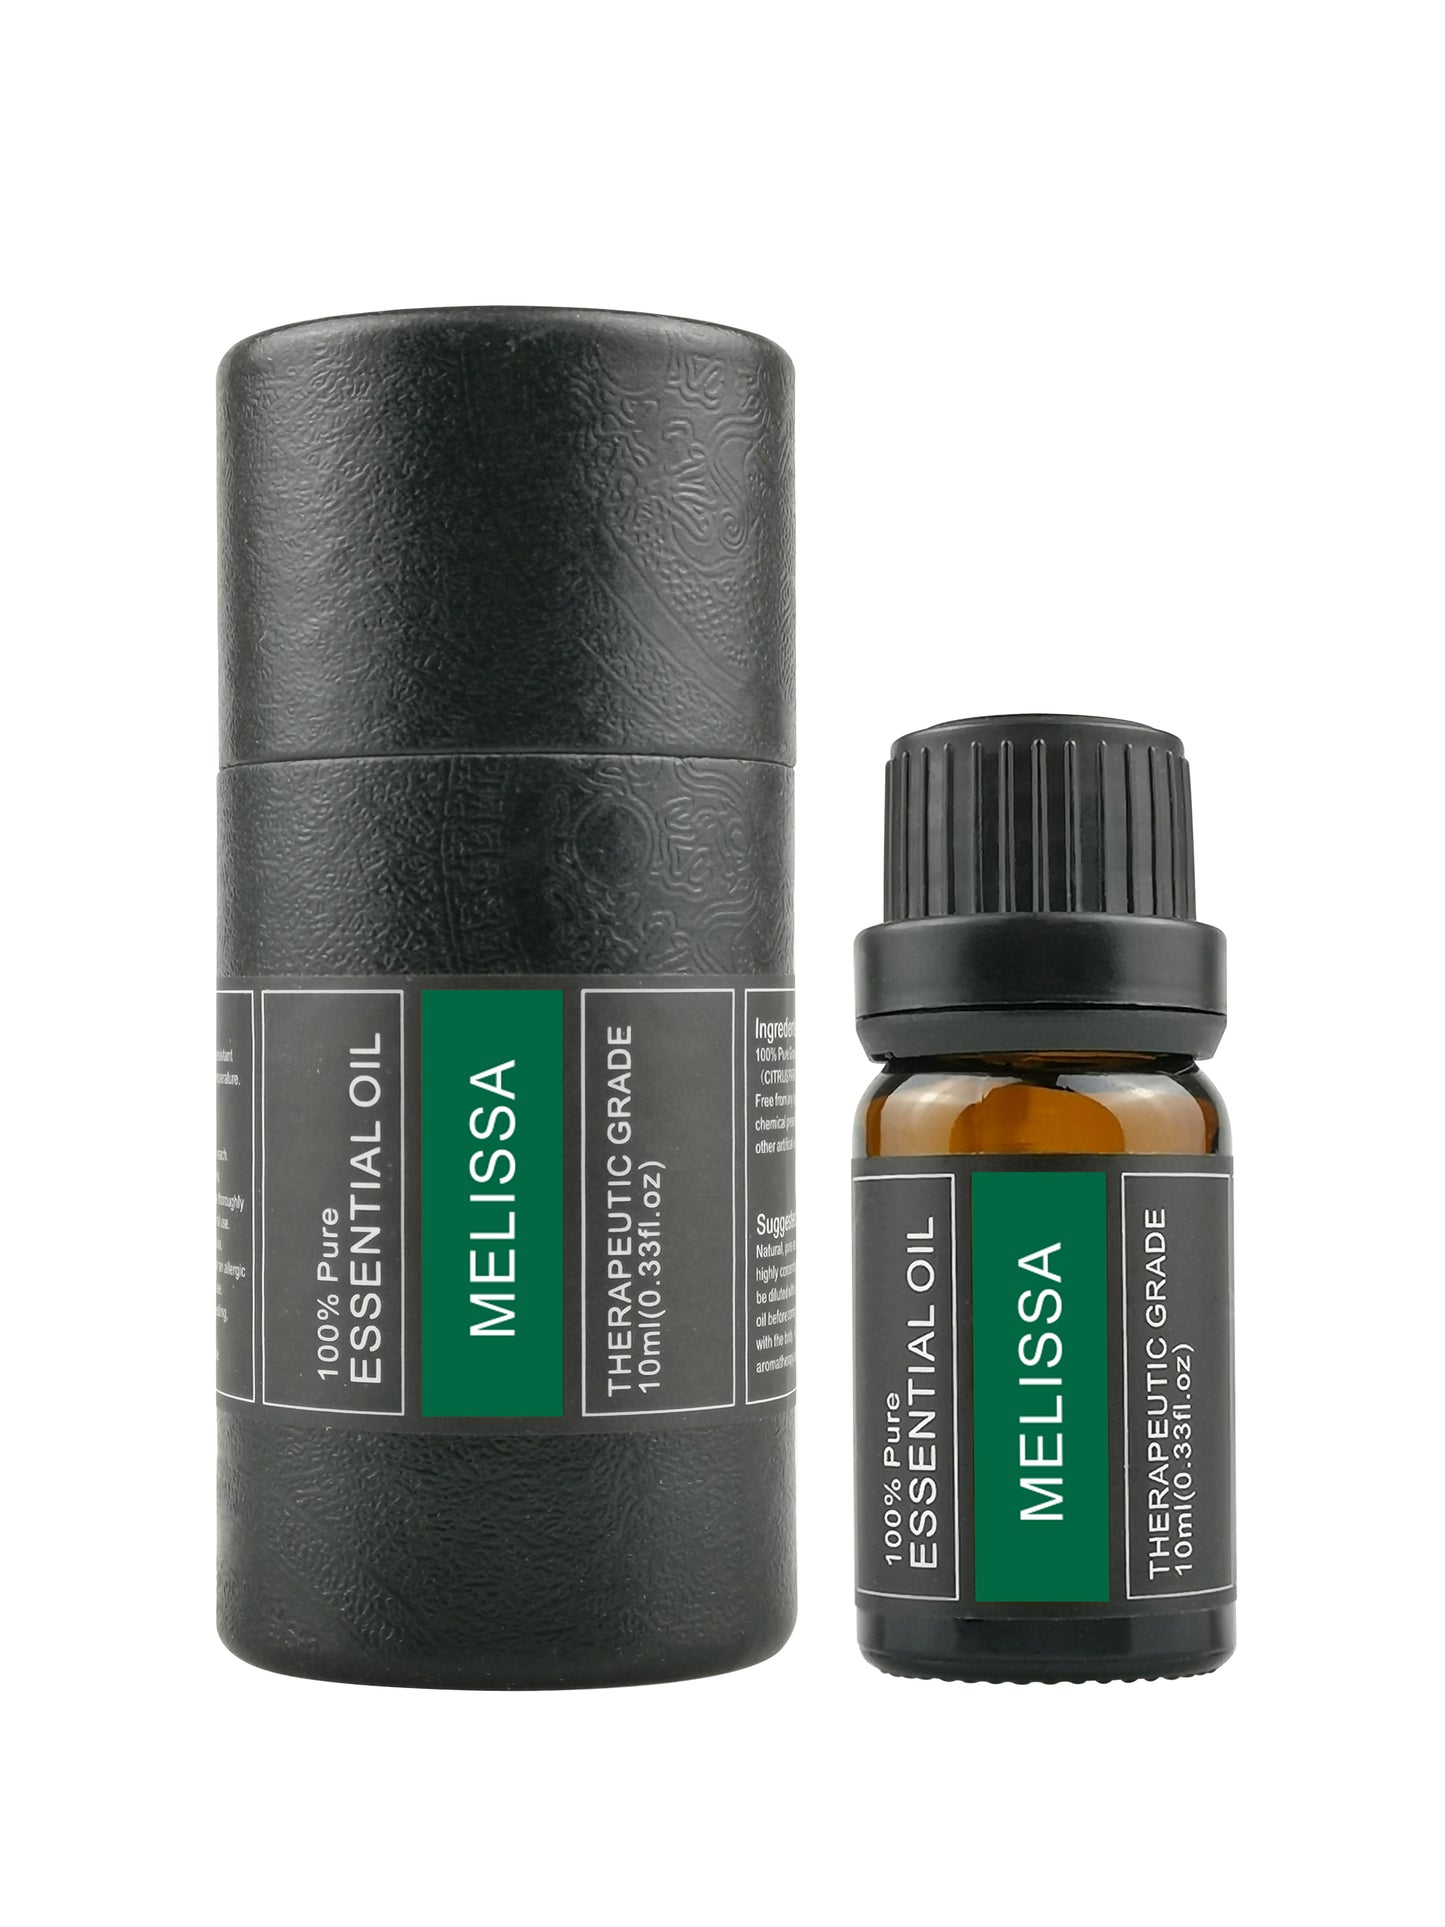 OEM & ODM Organic Melissa Aromatherapy Essential Oil, Wholesale Natural Single Essential Oil 252